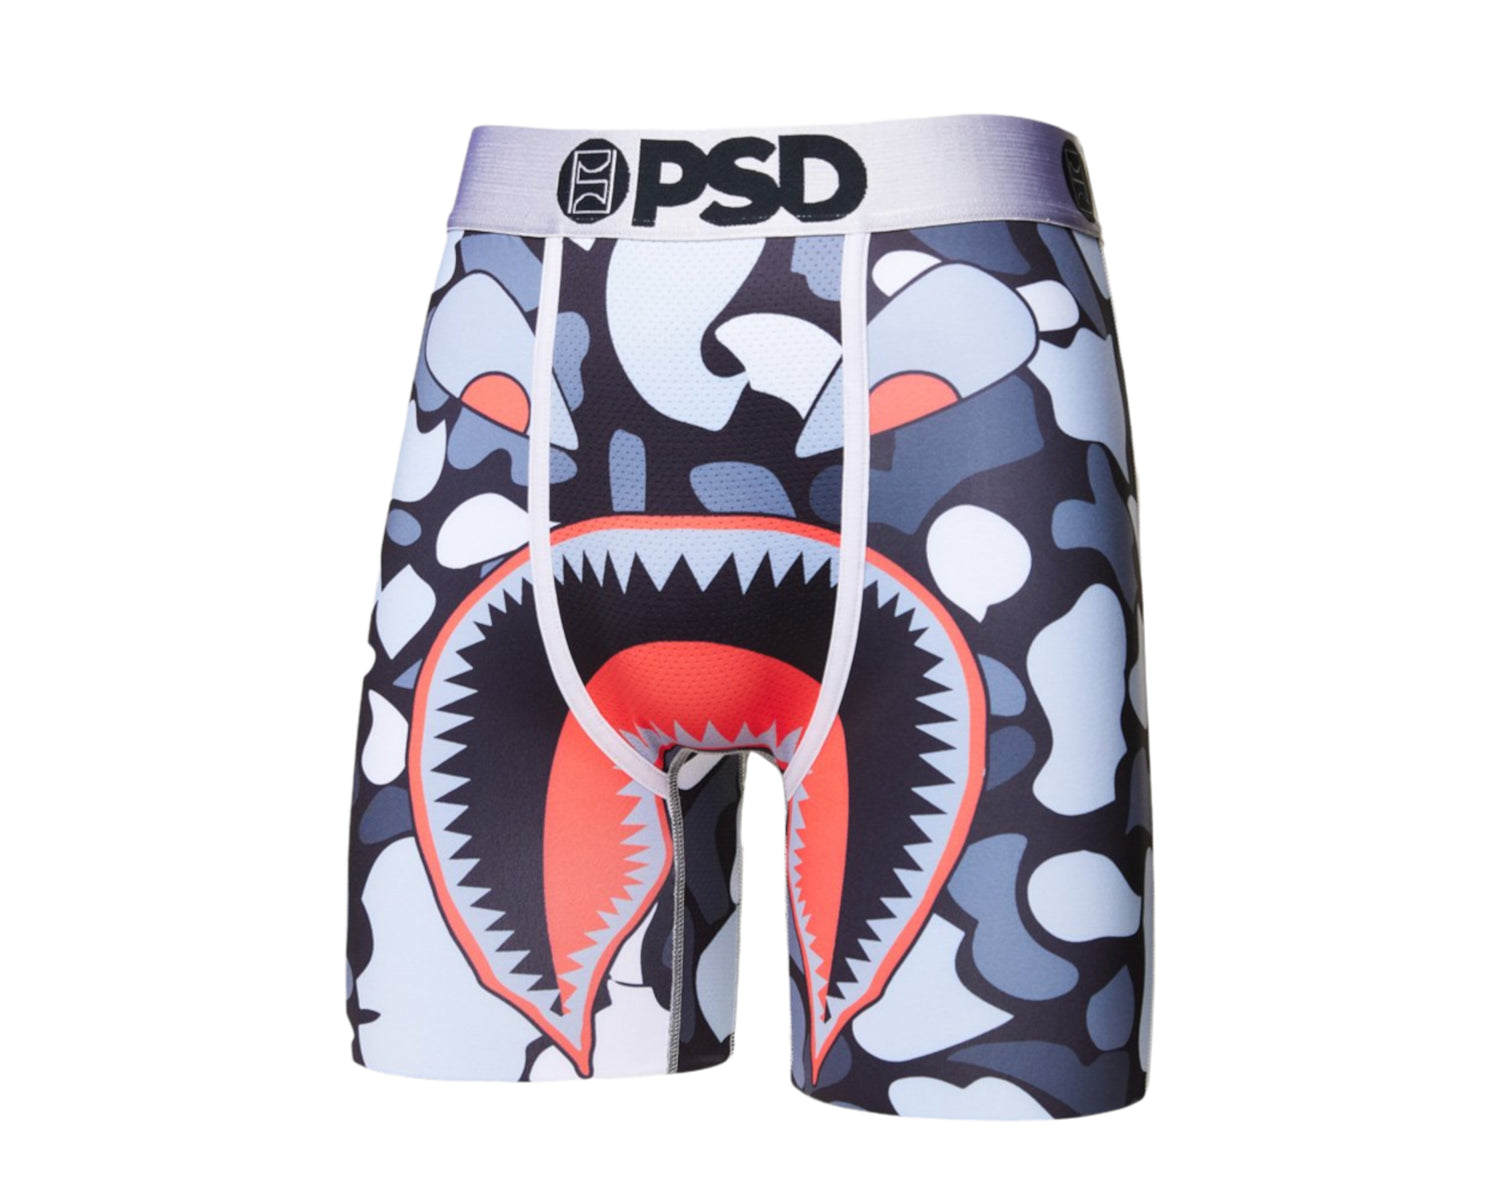 PSD Warface Oakland Boxer Briefs Men's Underwear